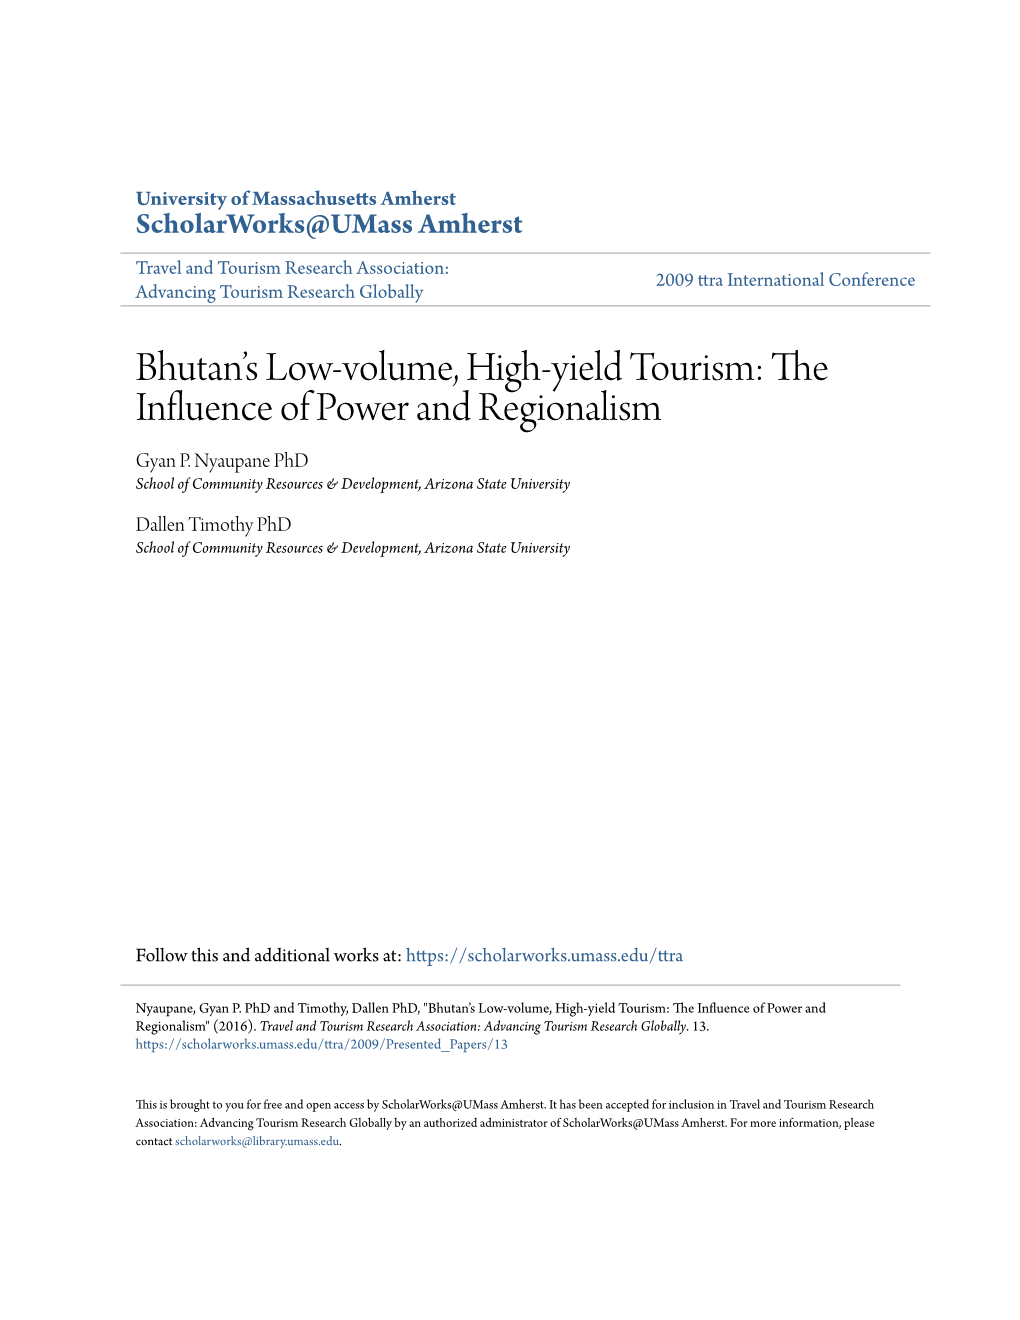 Bhutan's Low-Volume, High-Yield Tourism